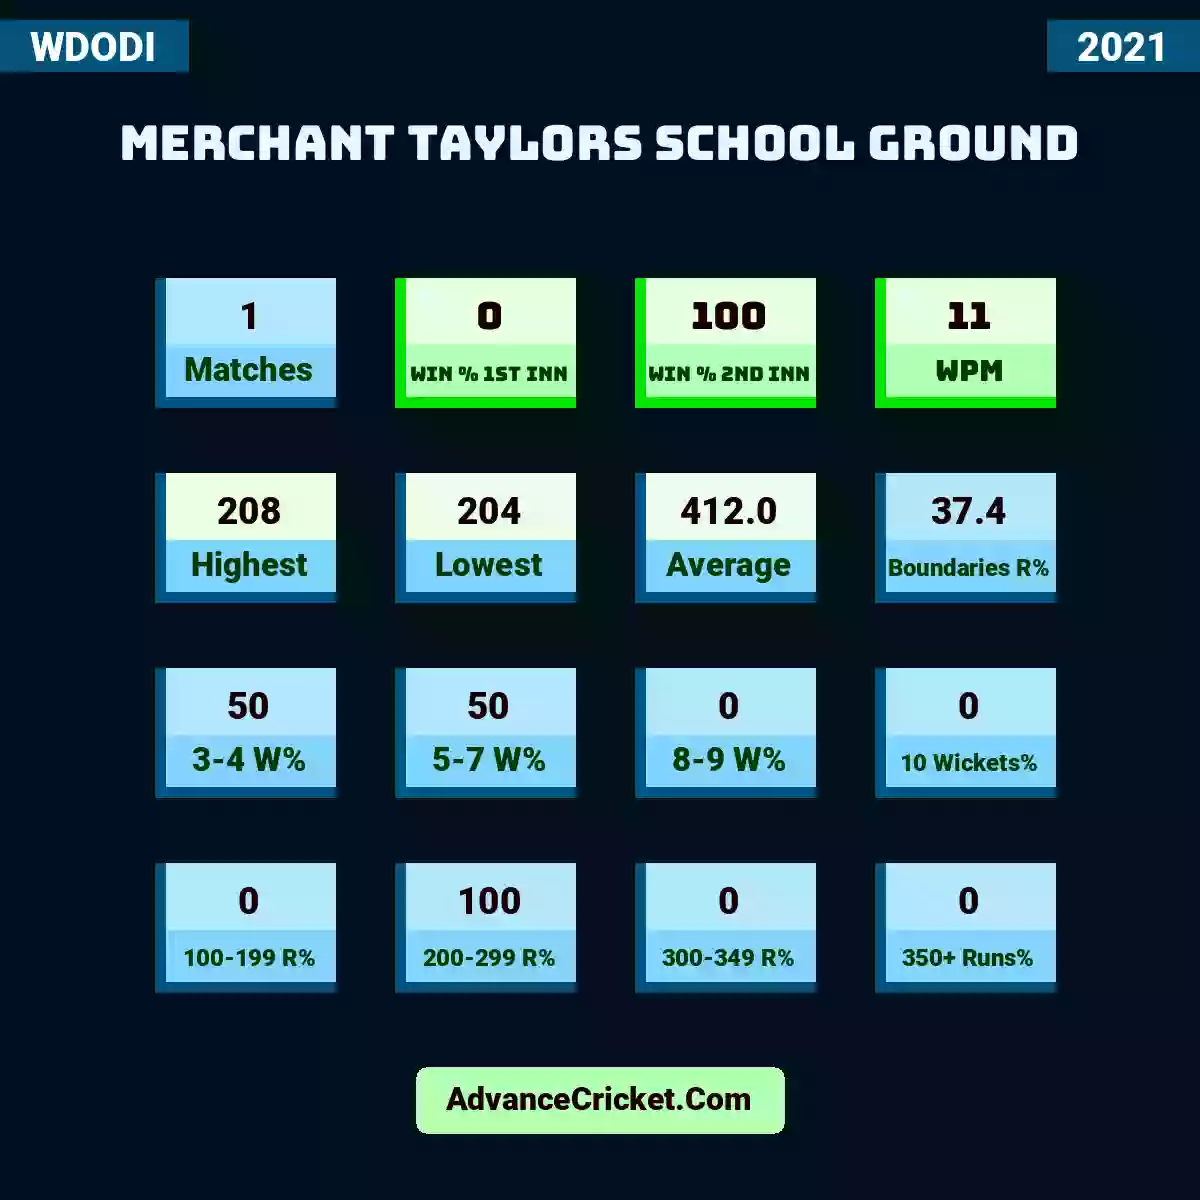 Image showing Merchant Taylors School Ground with Matches: 1, Win % 1st Inn: 0, Win % 2nd Inn: 100, WPM: 11, Highest: 208, Lowest: 204, Average: 412.0, Boundaries R%: 37.4, 3-4 W%: 50, 5-7 W%: 50, 8-9 W%: 0, 10 Wickets%: 0, 100-199 R%: 0, 200-299 R%: 100, 300-349 R%: 0, 350+ Runs%: 0.